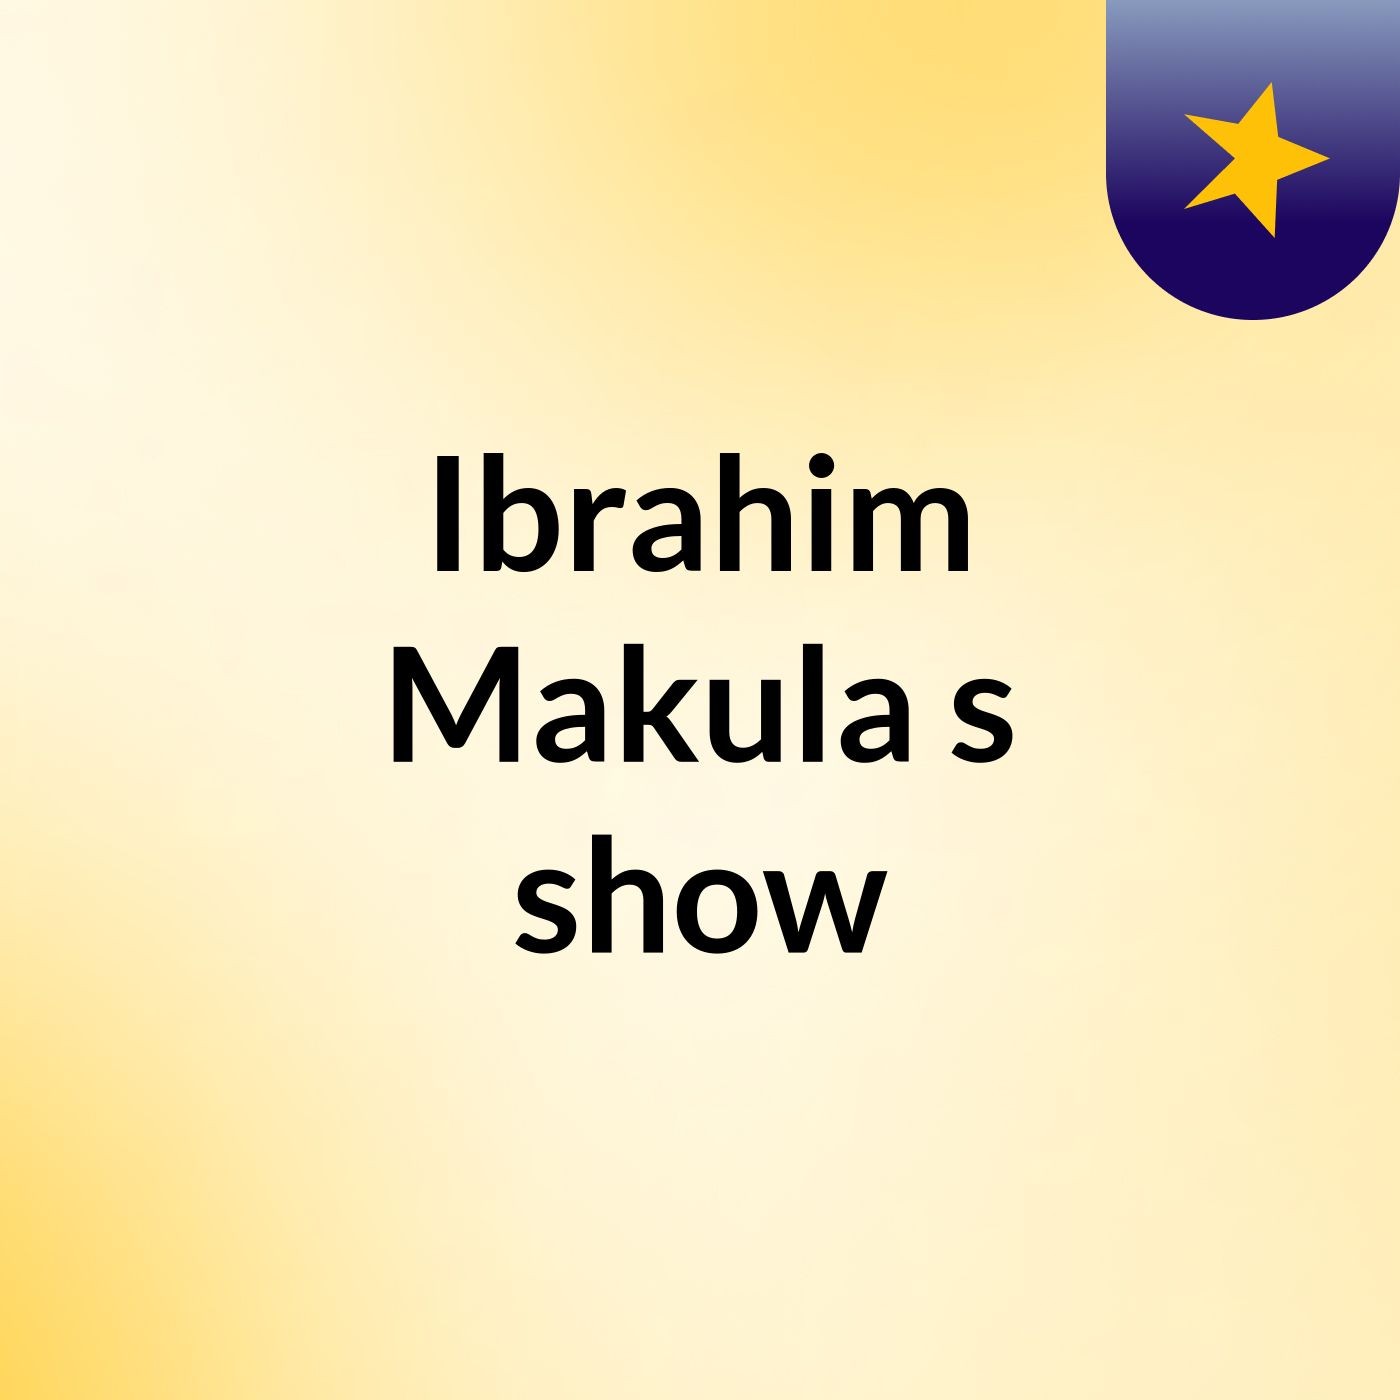 Episode 2 - Ibrahim Makula's show